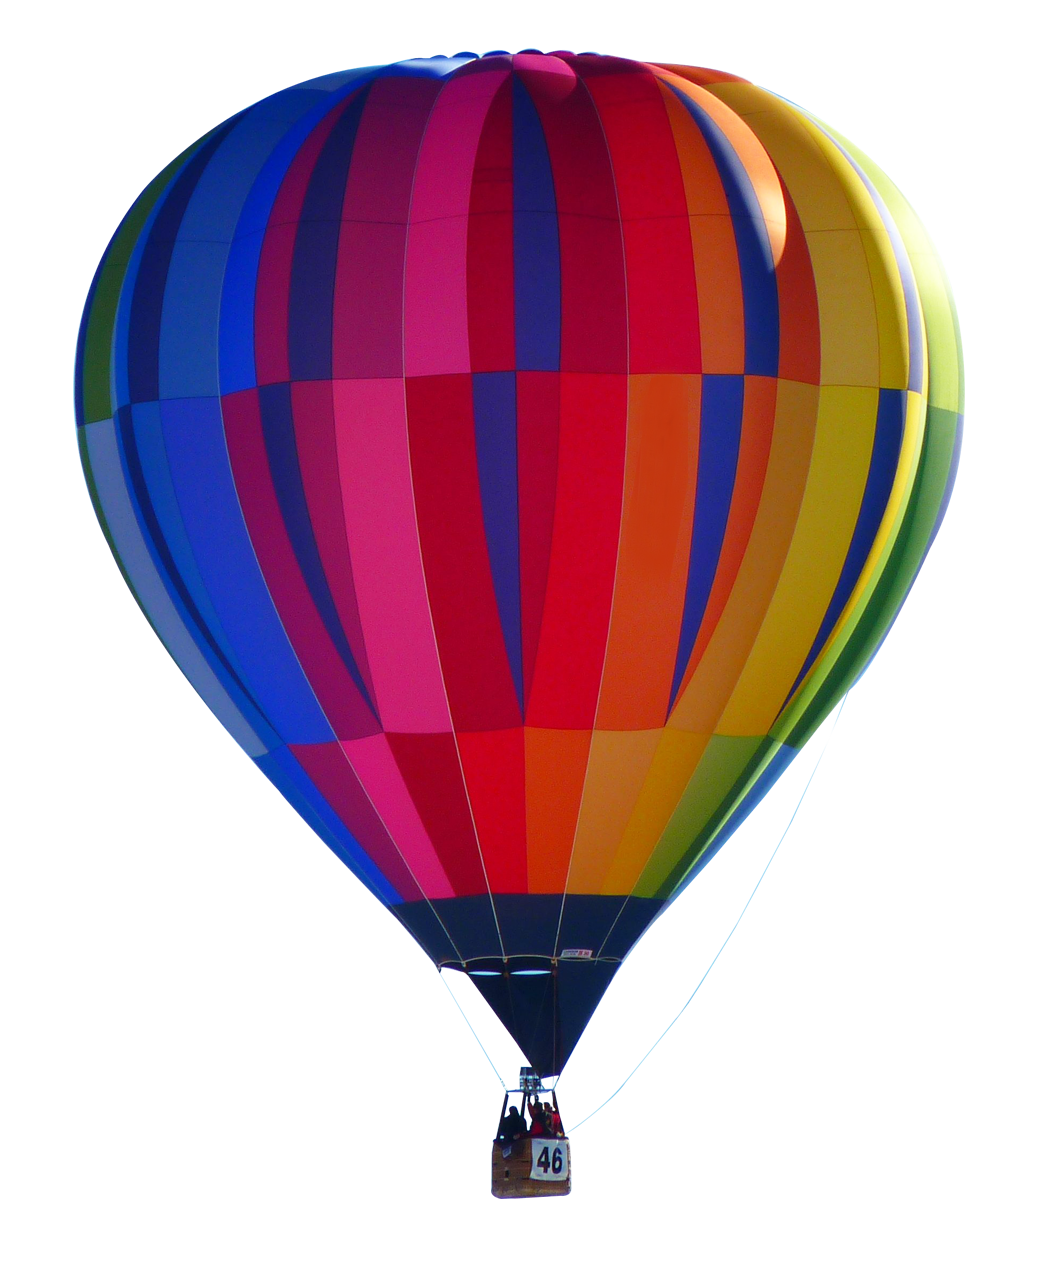 Hot Air Balloon PNG Image - PngPix